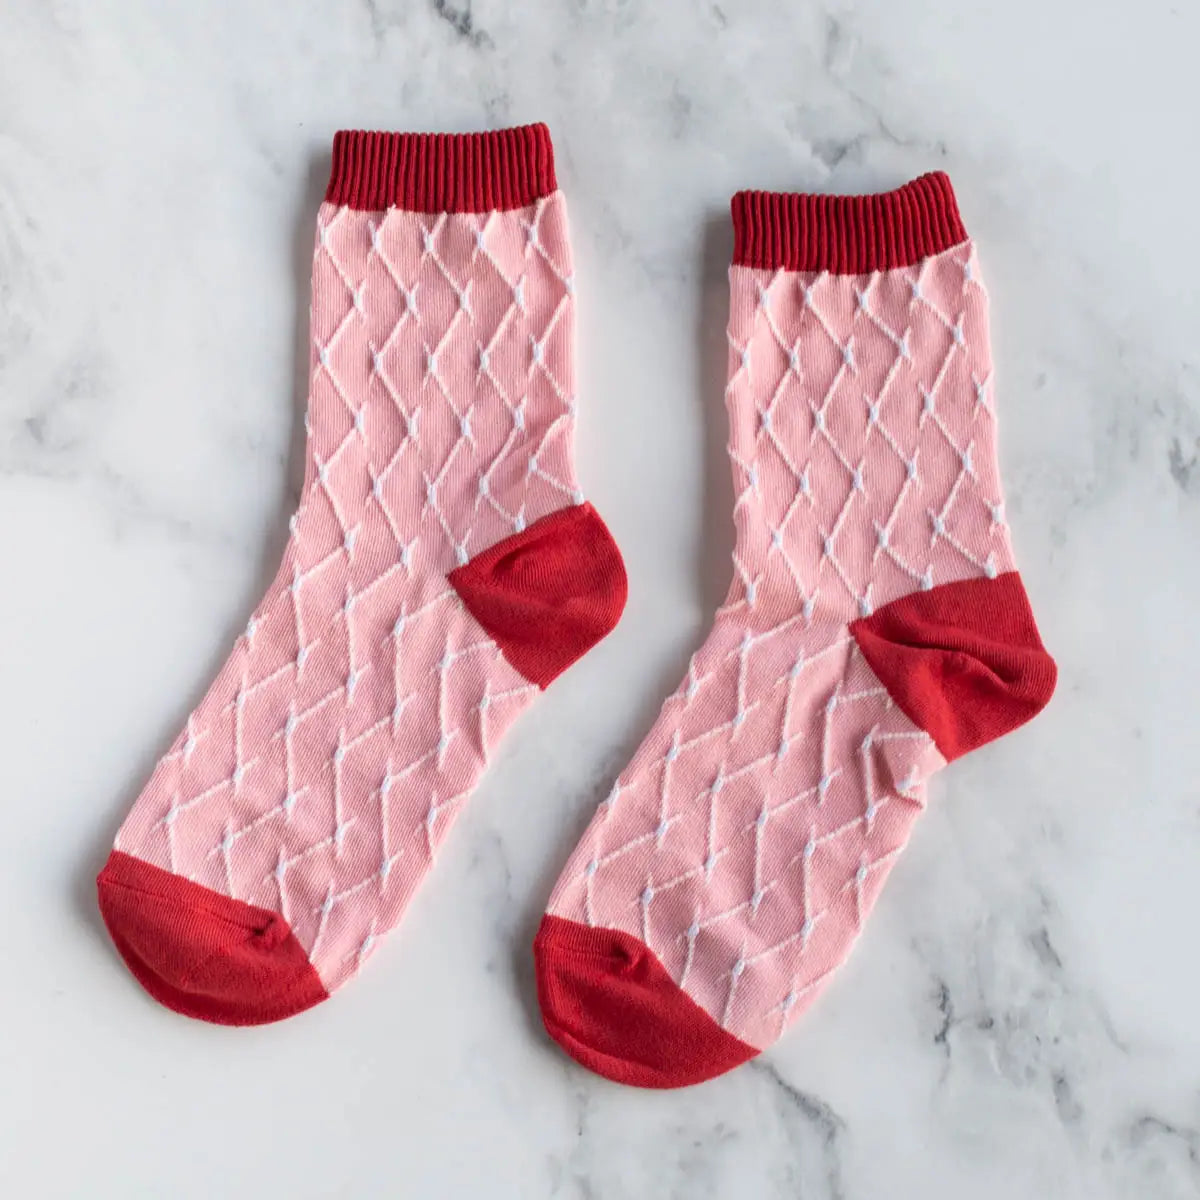 Contrast Socks - Proper